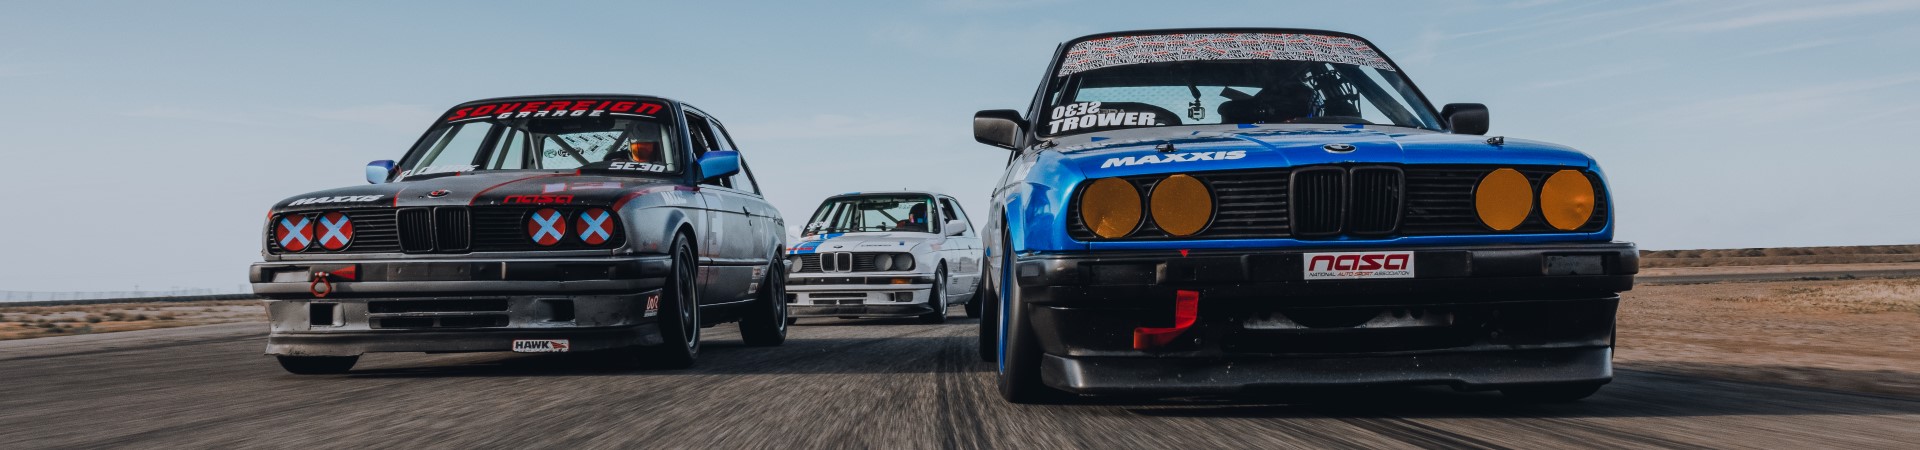 Three BMWs on a race track